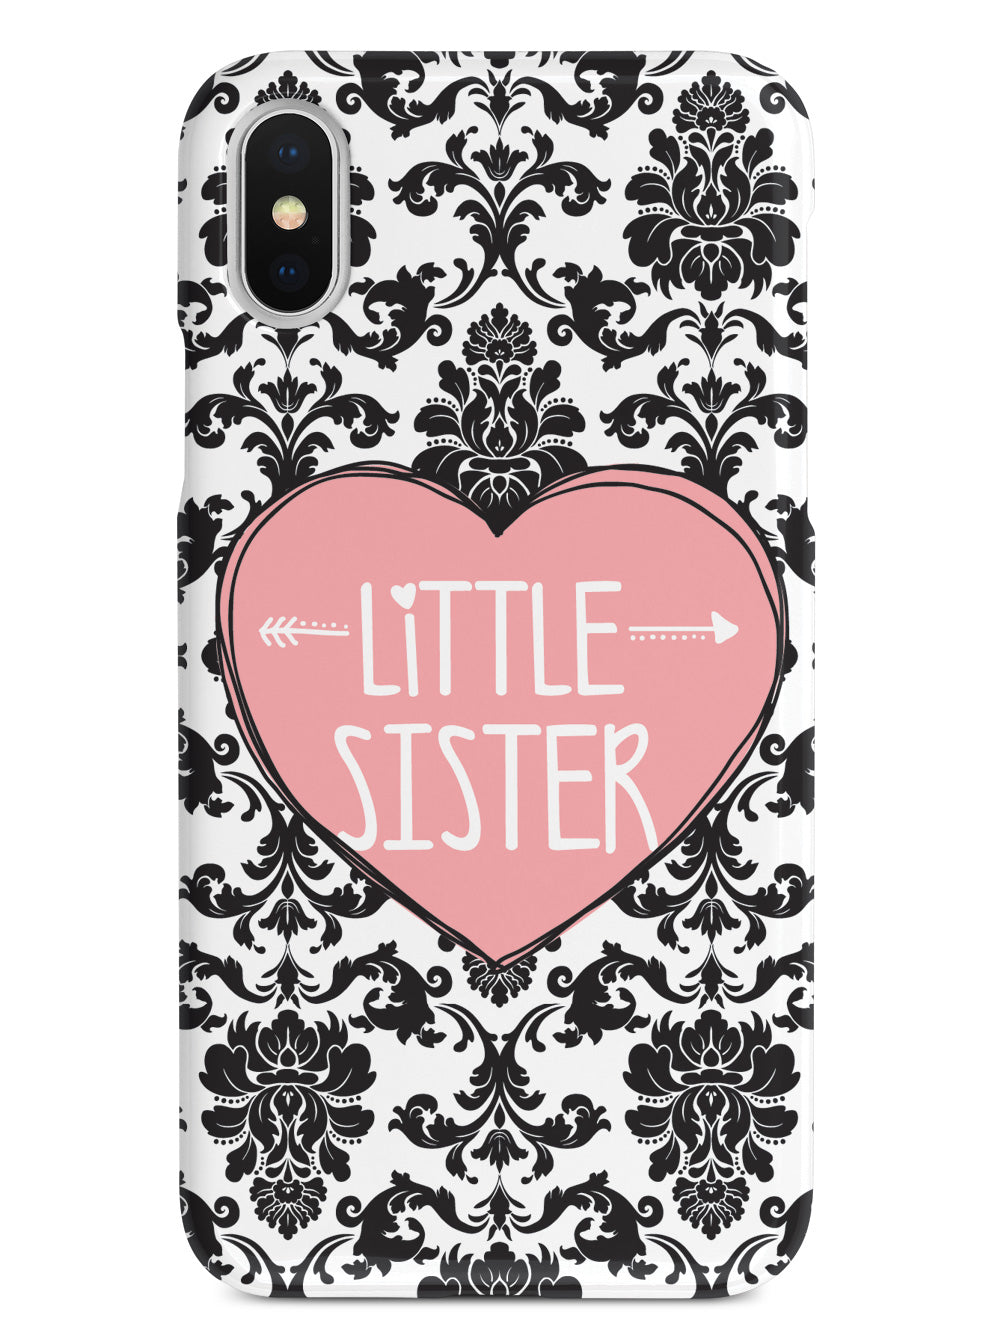 Sisterly Love - Little Sister - Damask Case